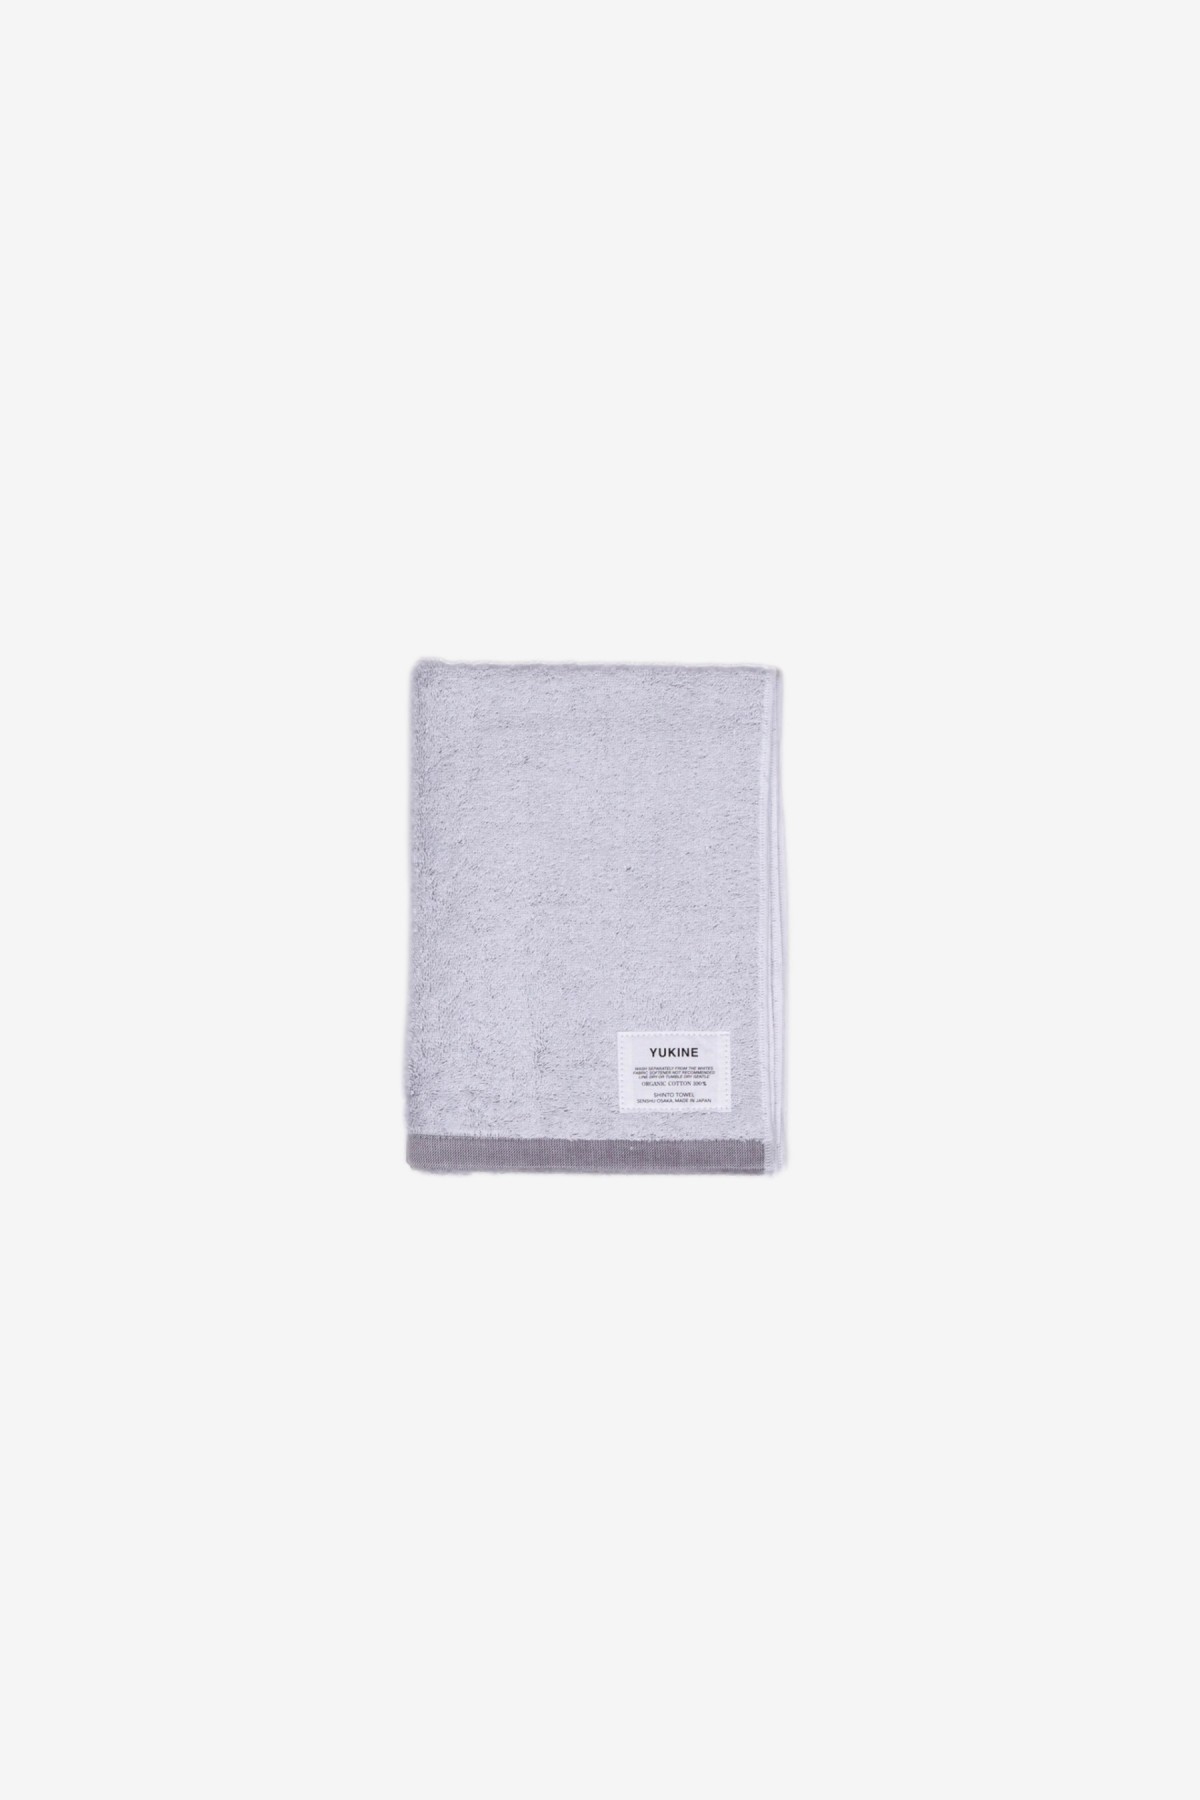 Shinto Yukine Mini Bath Towel Hai in Grey